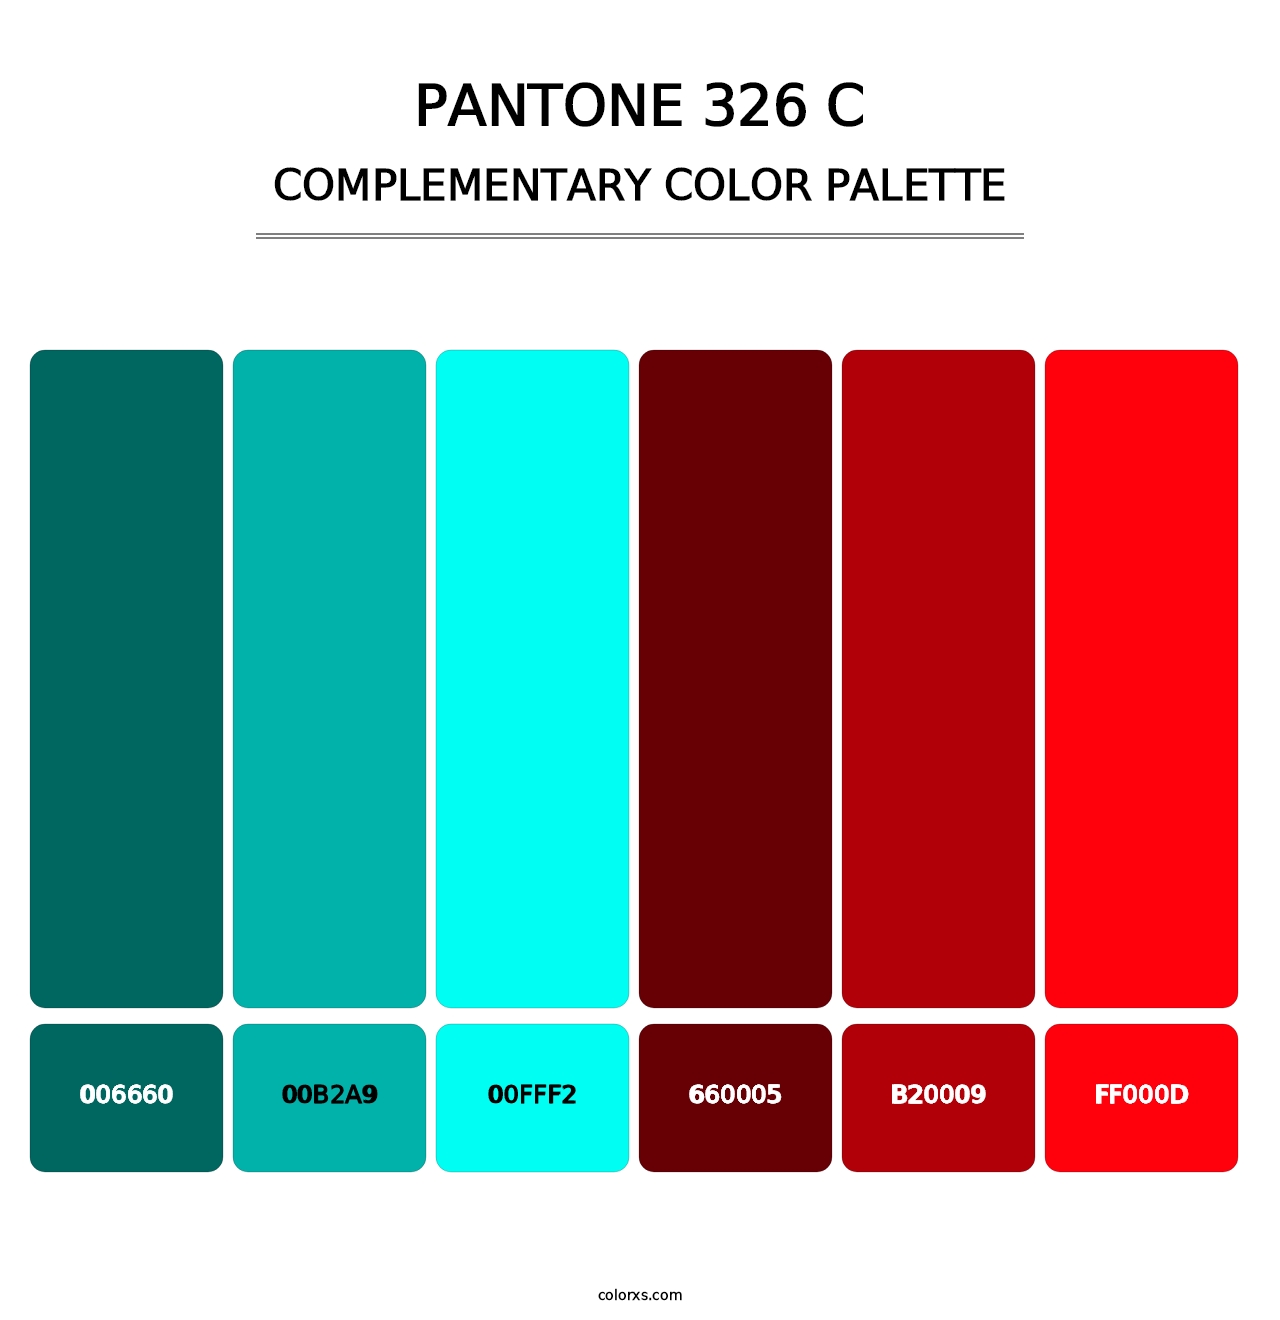 PANTONE 326 C - Complementary Color Palette